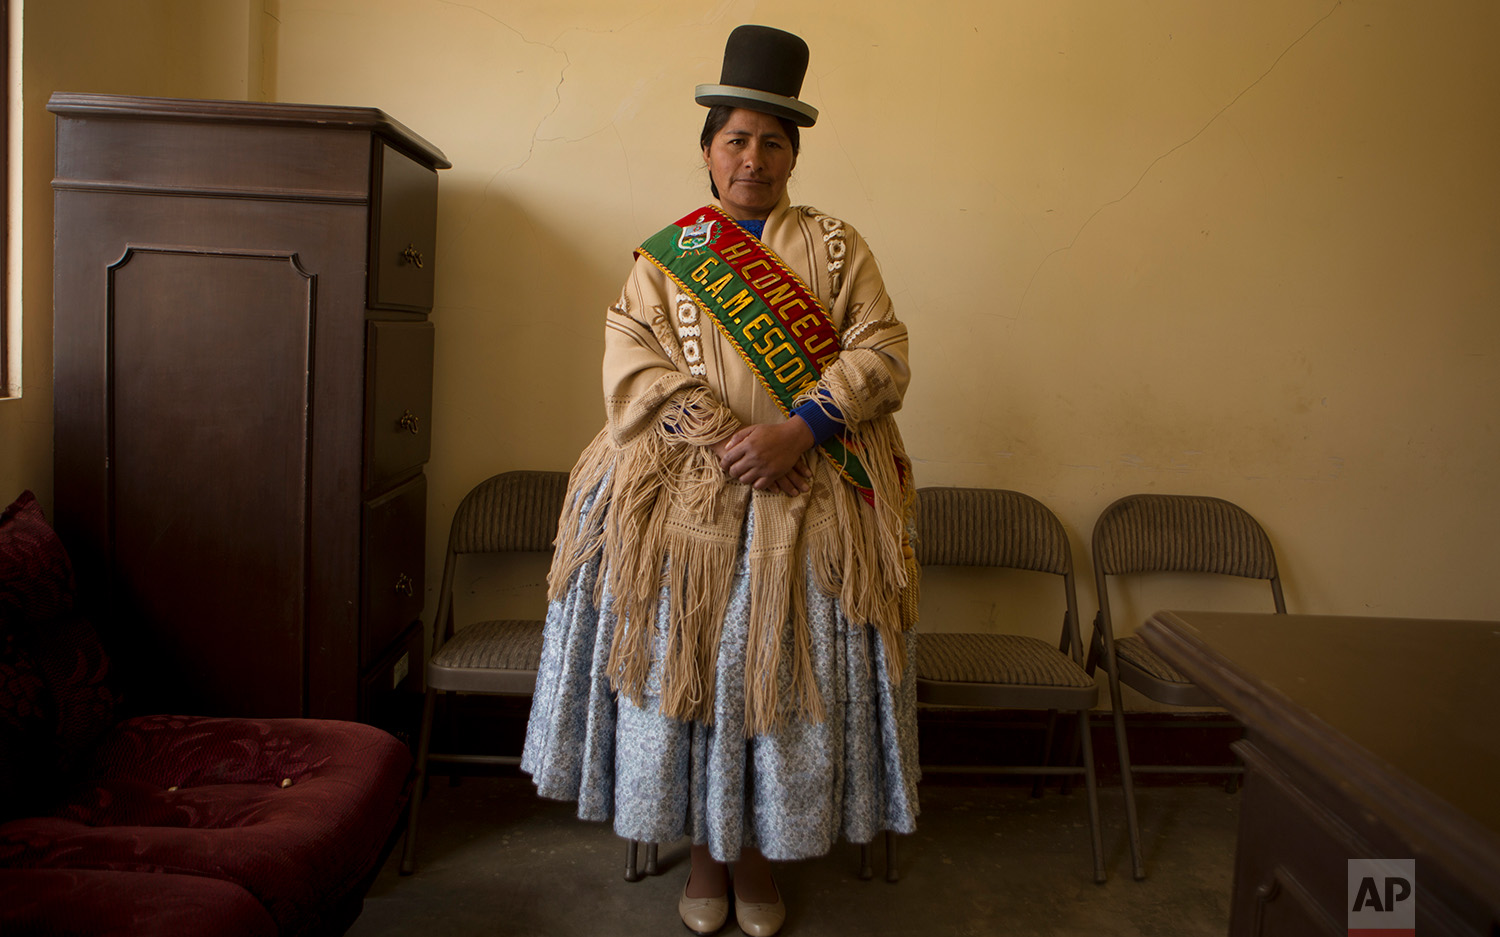  In this June 30, 2018 photo, Escoma Councilwoman Marcela Huanca, pose for a photo wearing her official sash, in Escoma, Bolivia. (AP Photo/Juan Karita) 